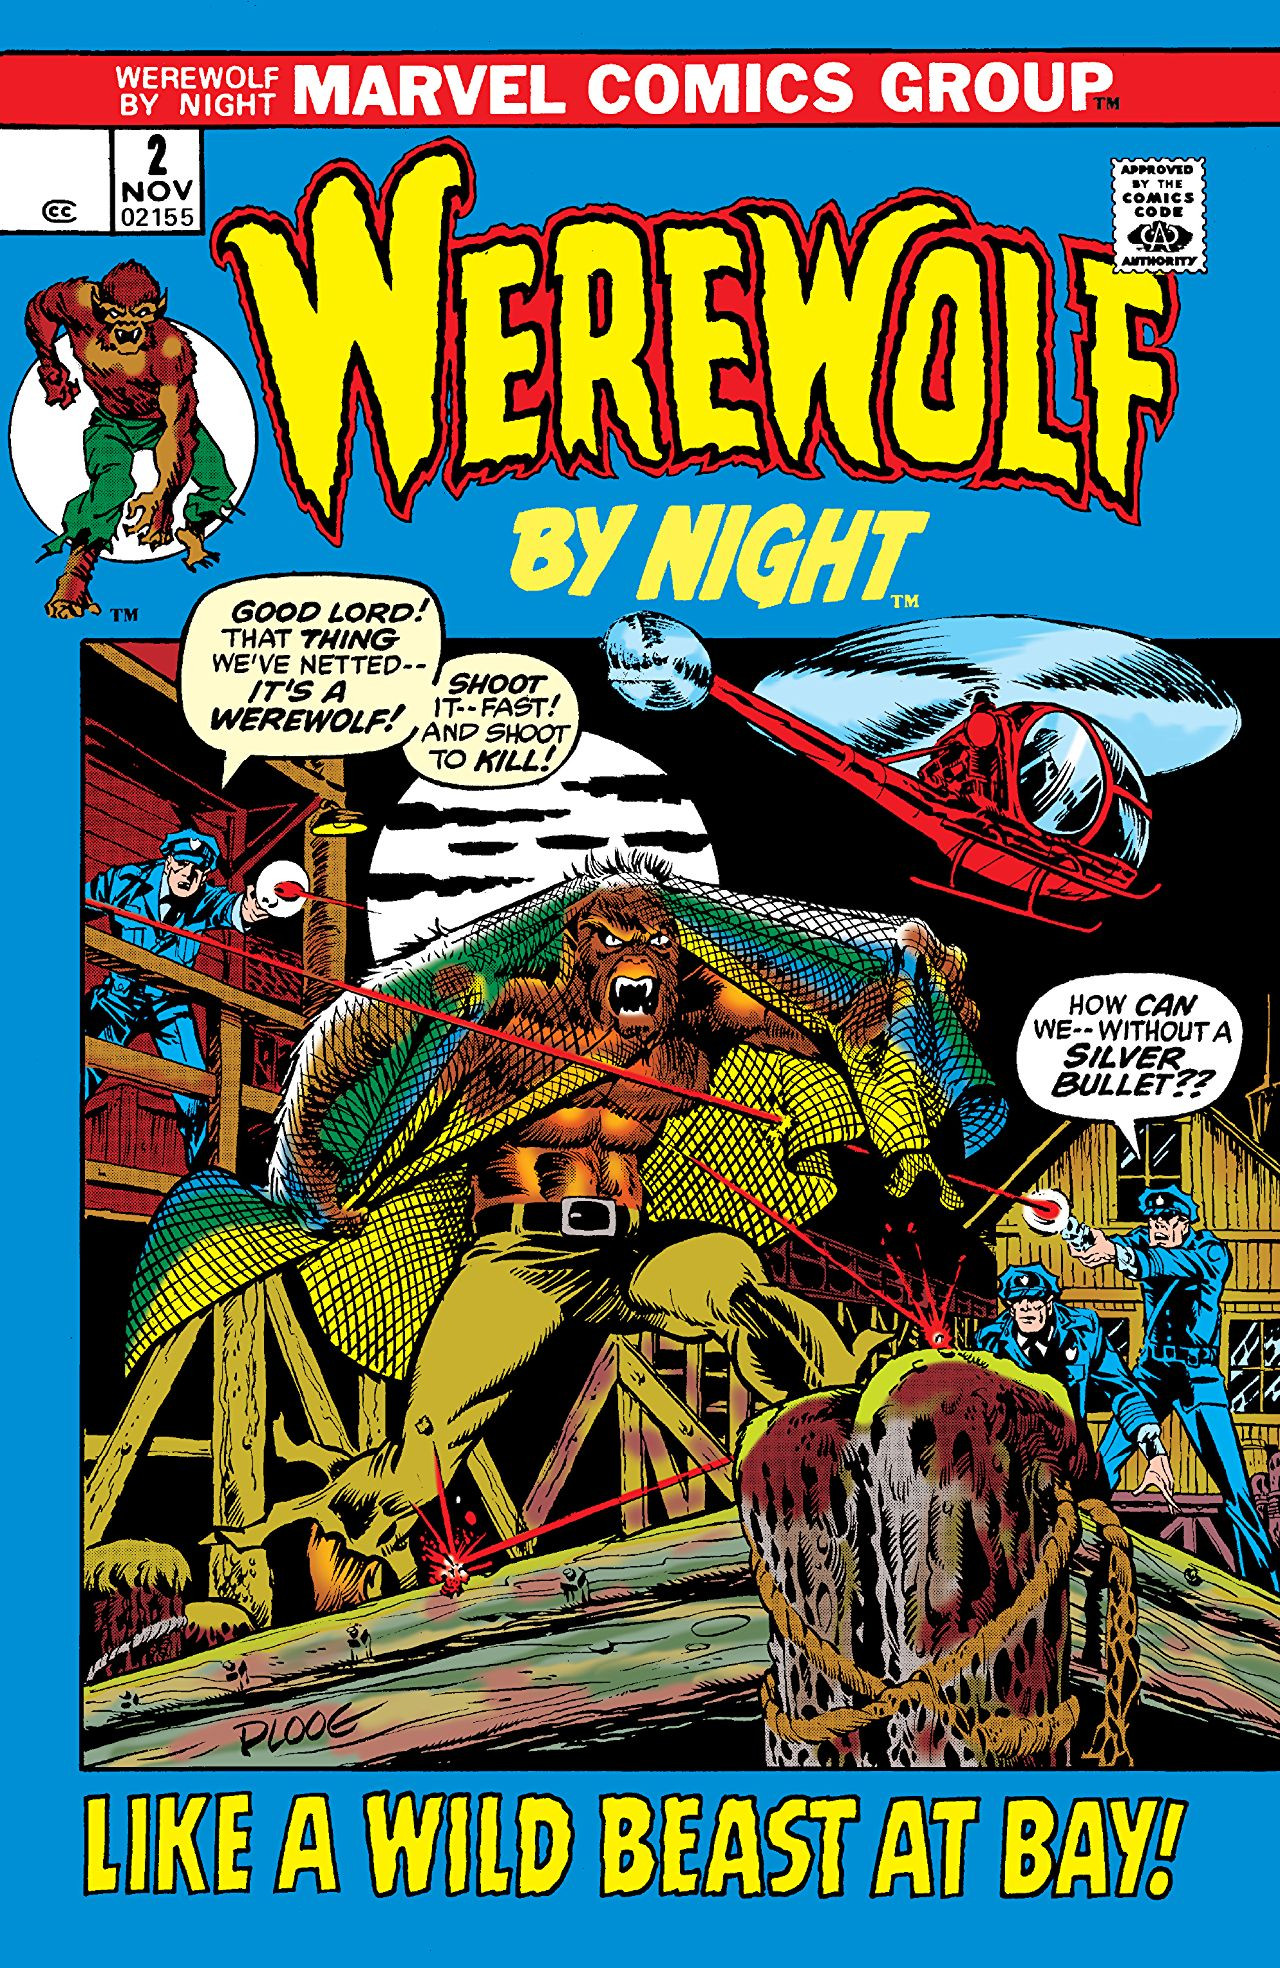 Werewolf by Night Vol 1 2, Marvel Database